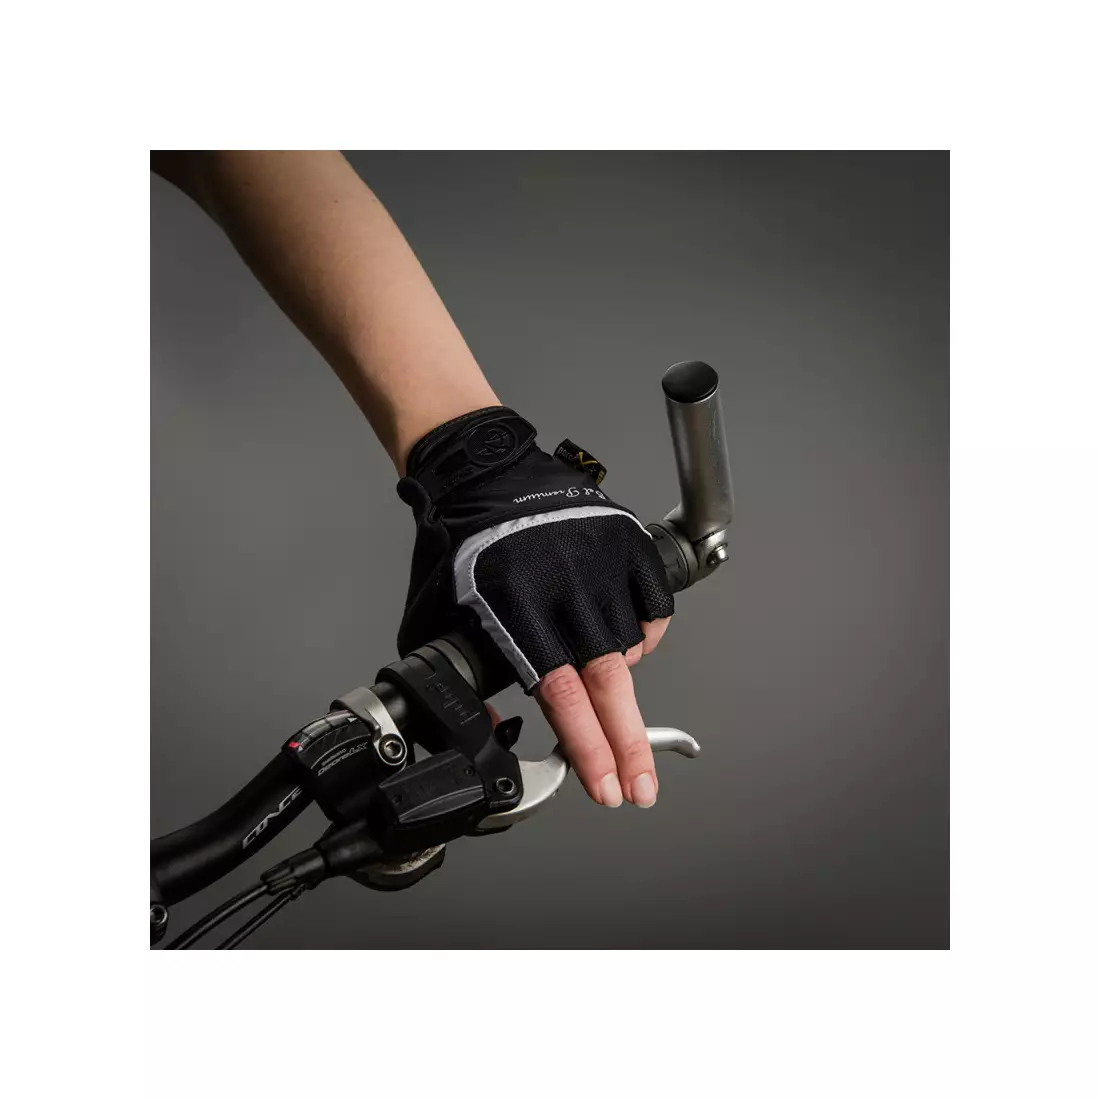 CHIBA LADY GEL women's cycling gloves, black